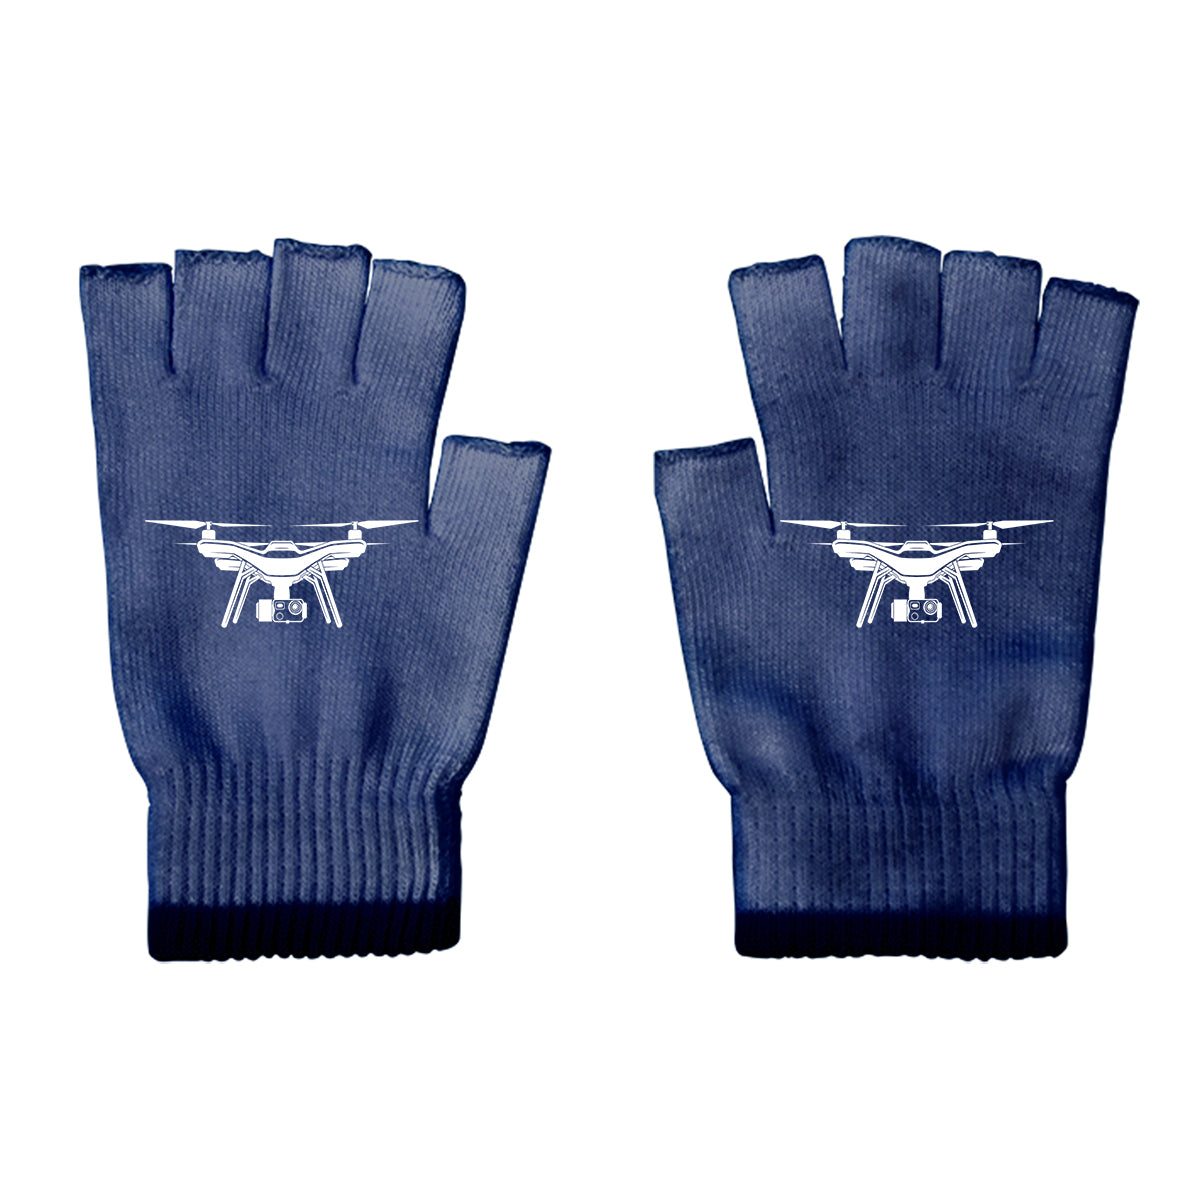 Drone Silhouette Designed Cut Gloves